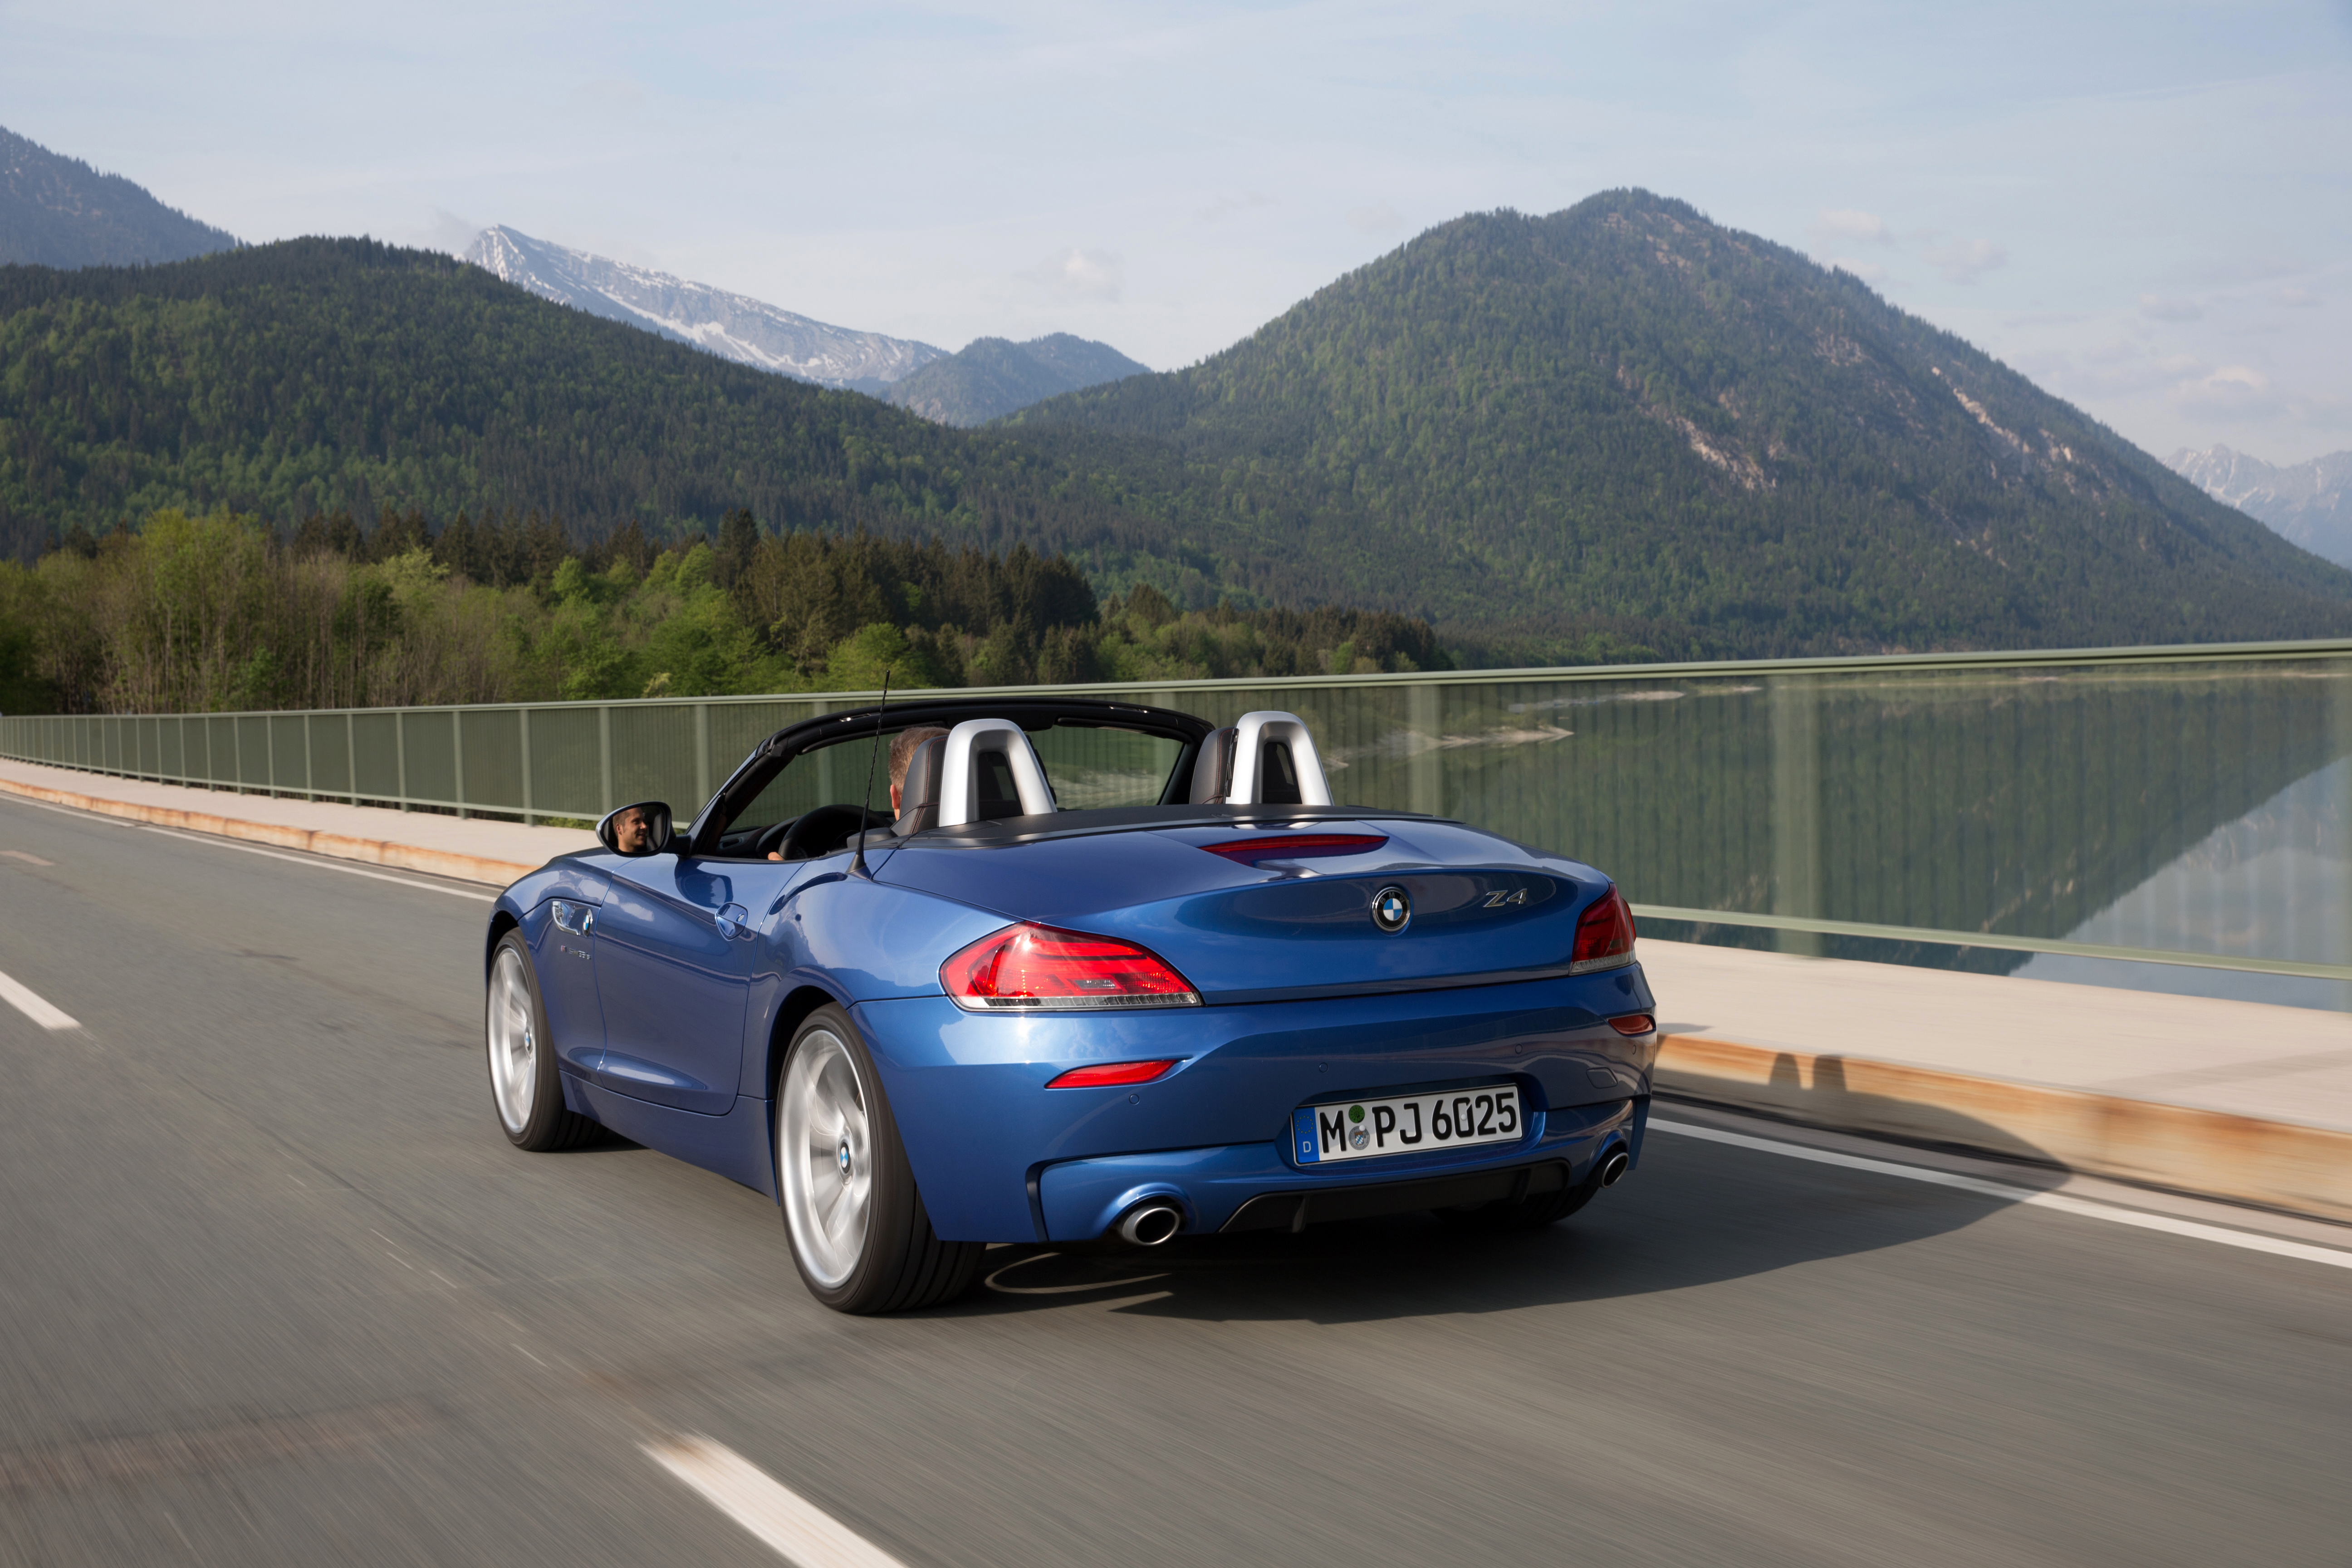 BMW to end Z4 production, but successor under development